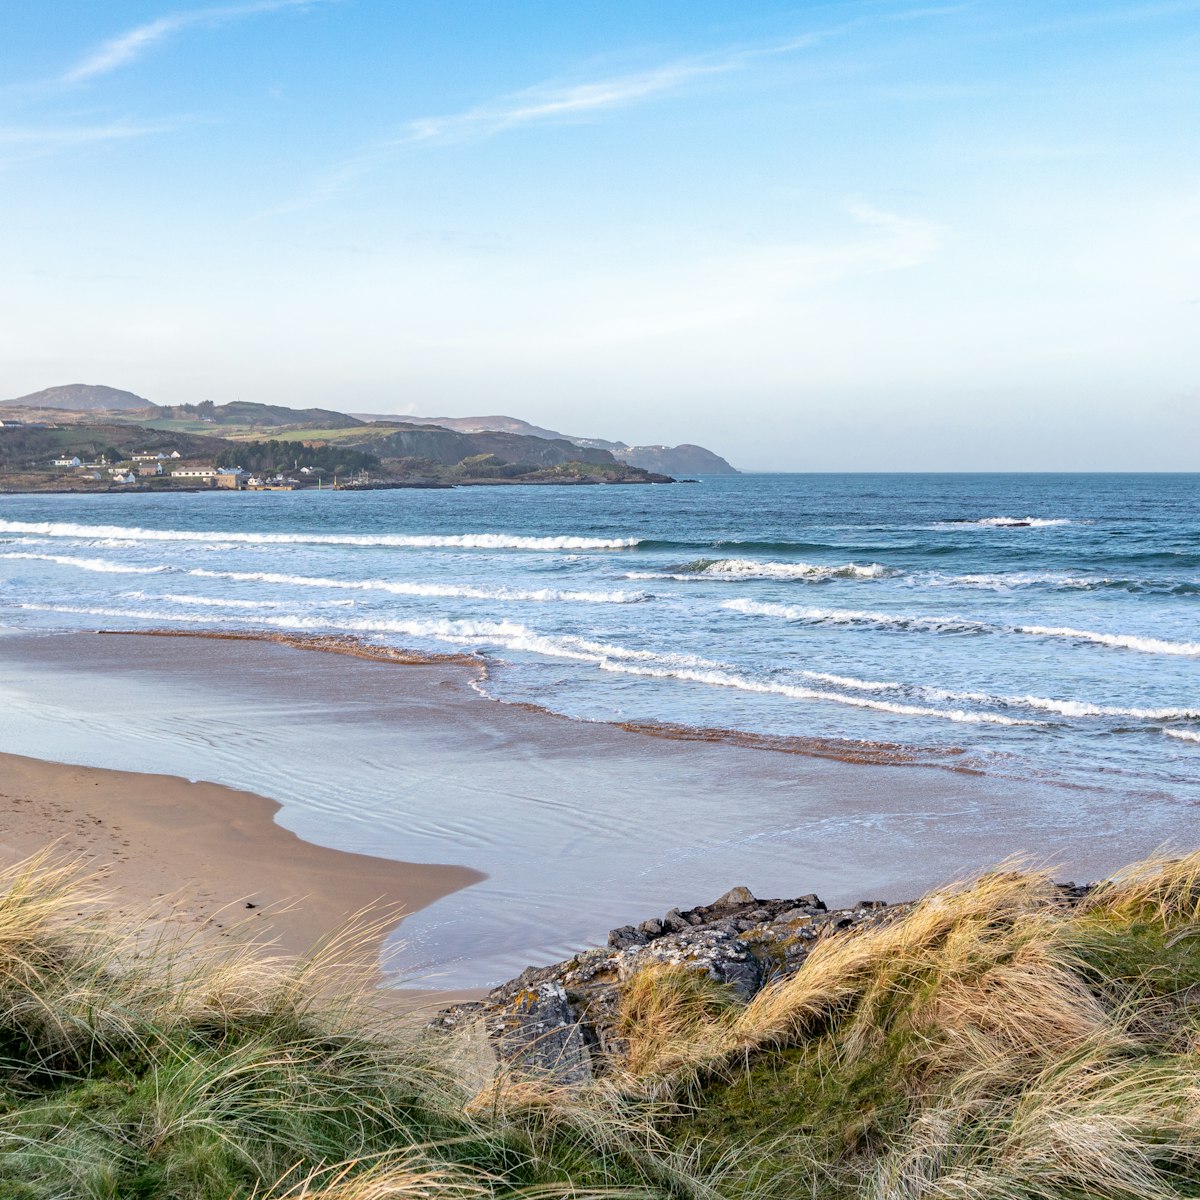 Culdaff beach, Inishowen Peninsula, County Donegal